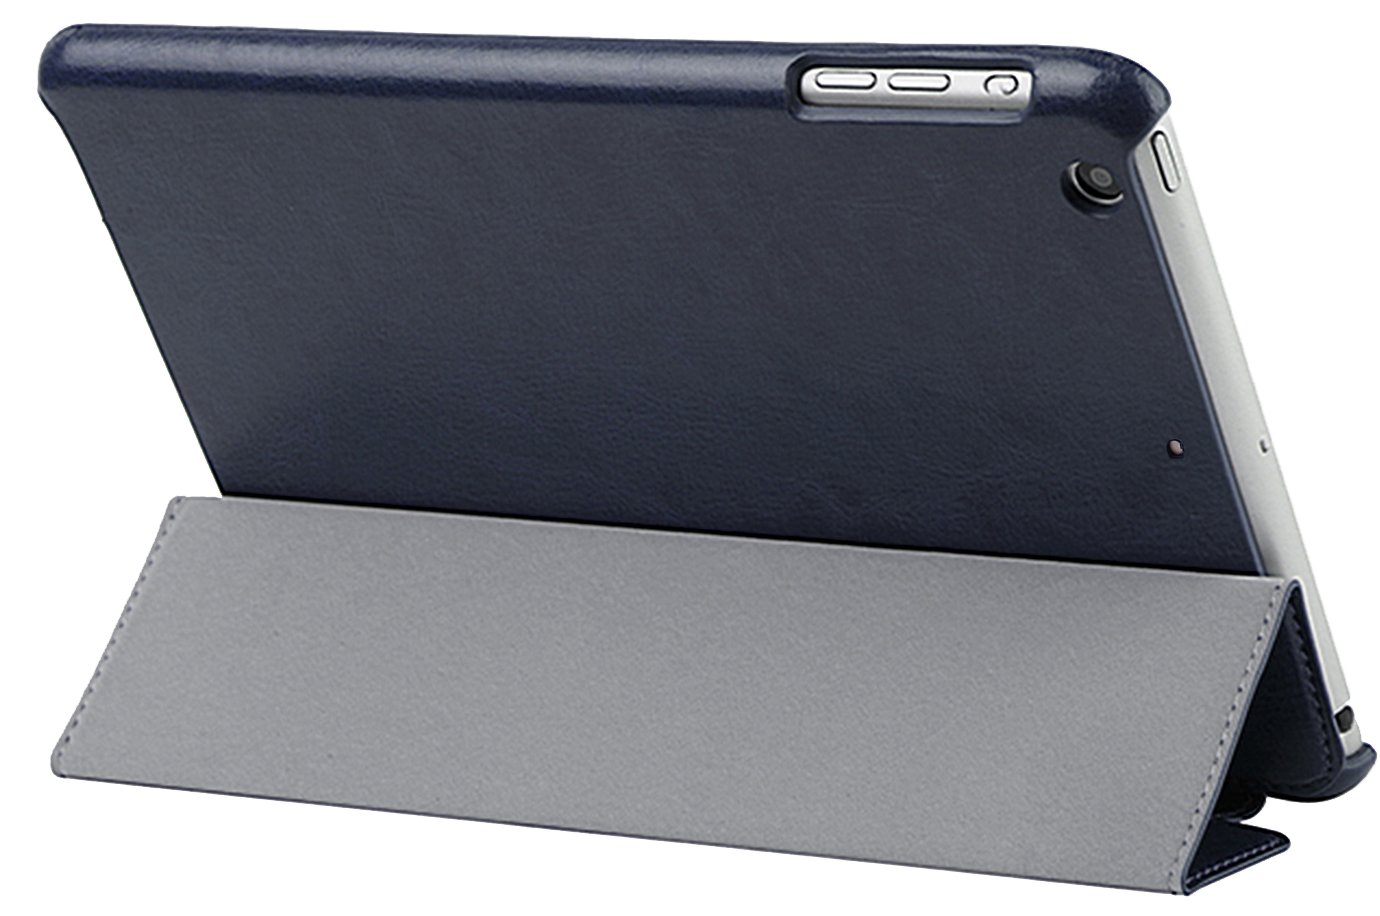  G-Case Slim Premium для iPad iPad mini 3 Black Blue